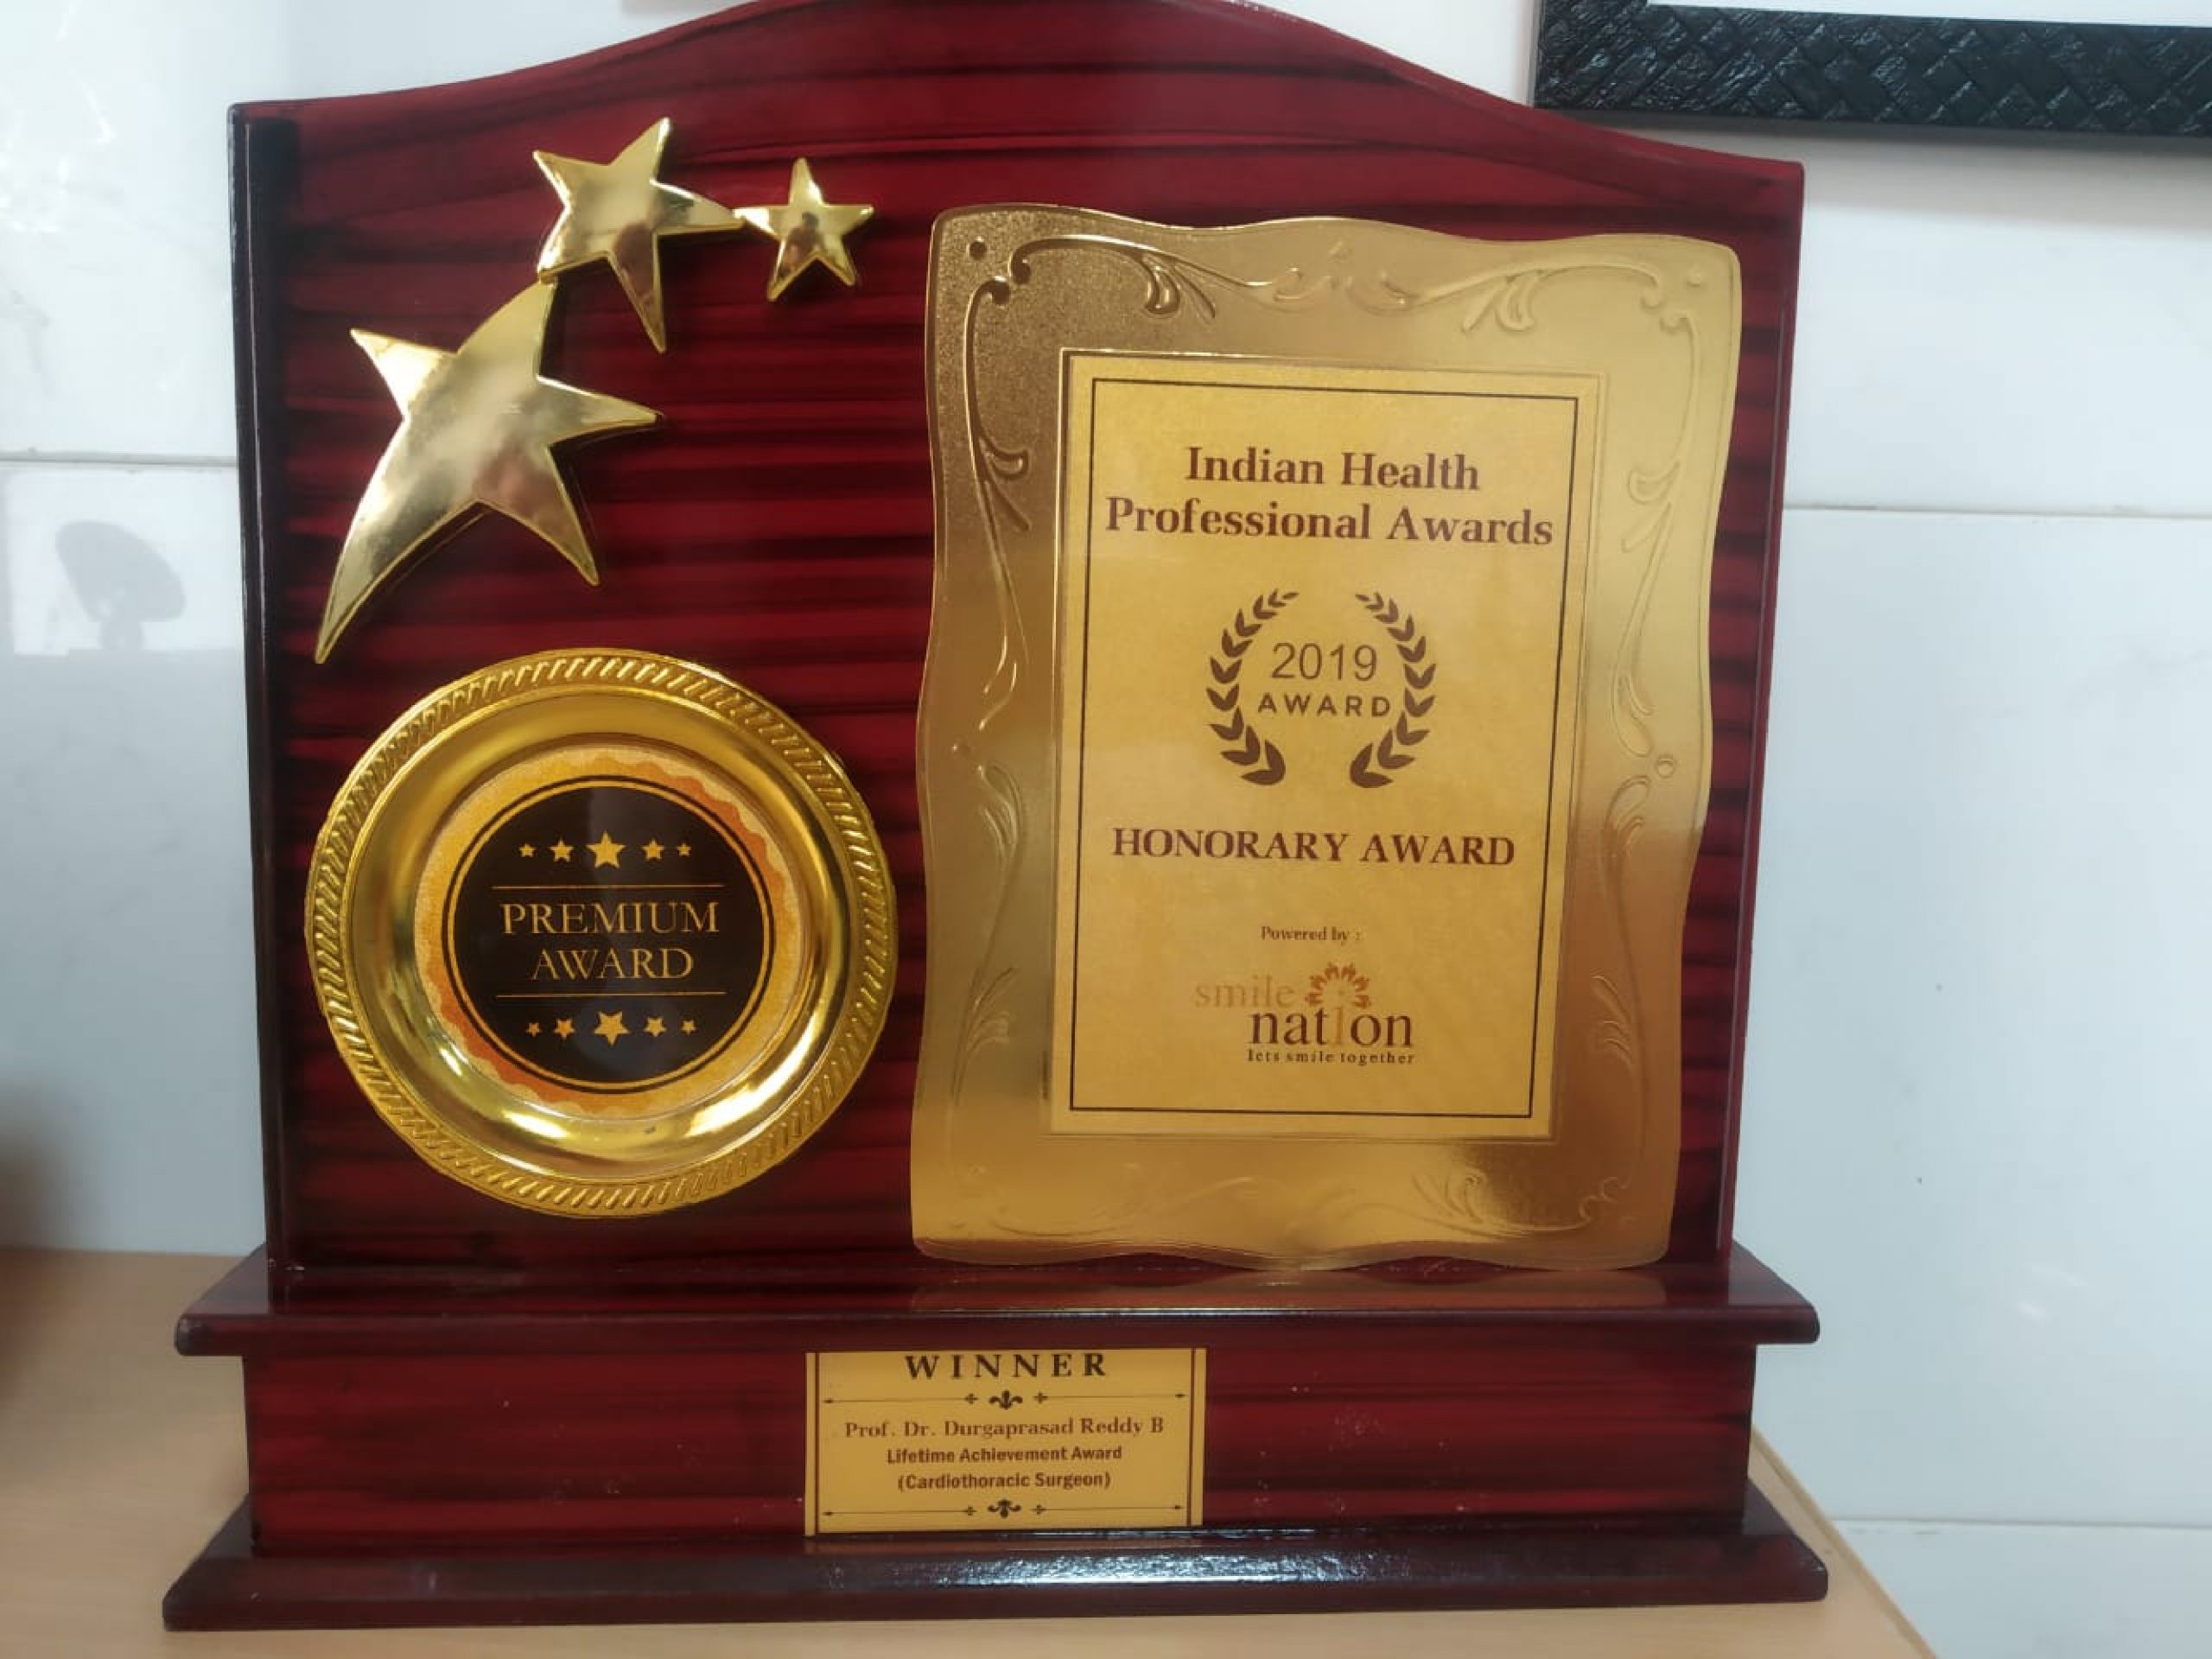 durgaprasad-reddy-lifetime-achievement-award